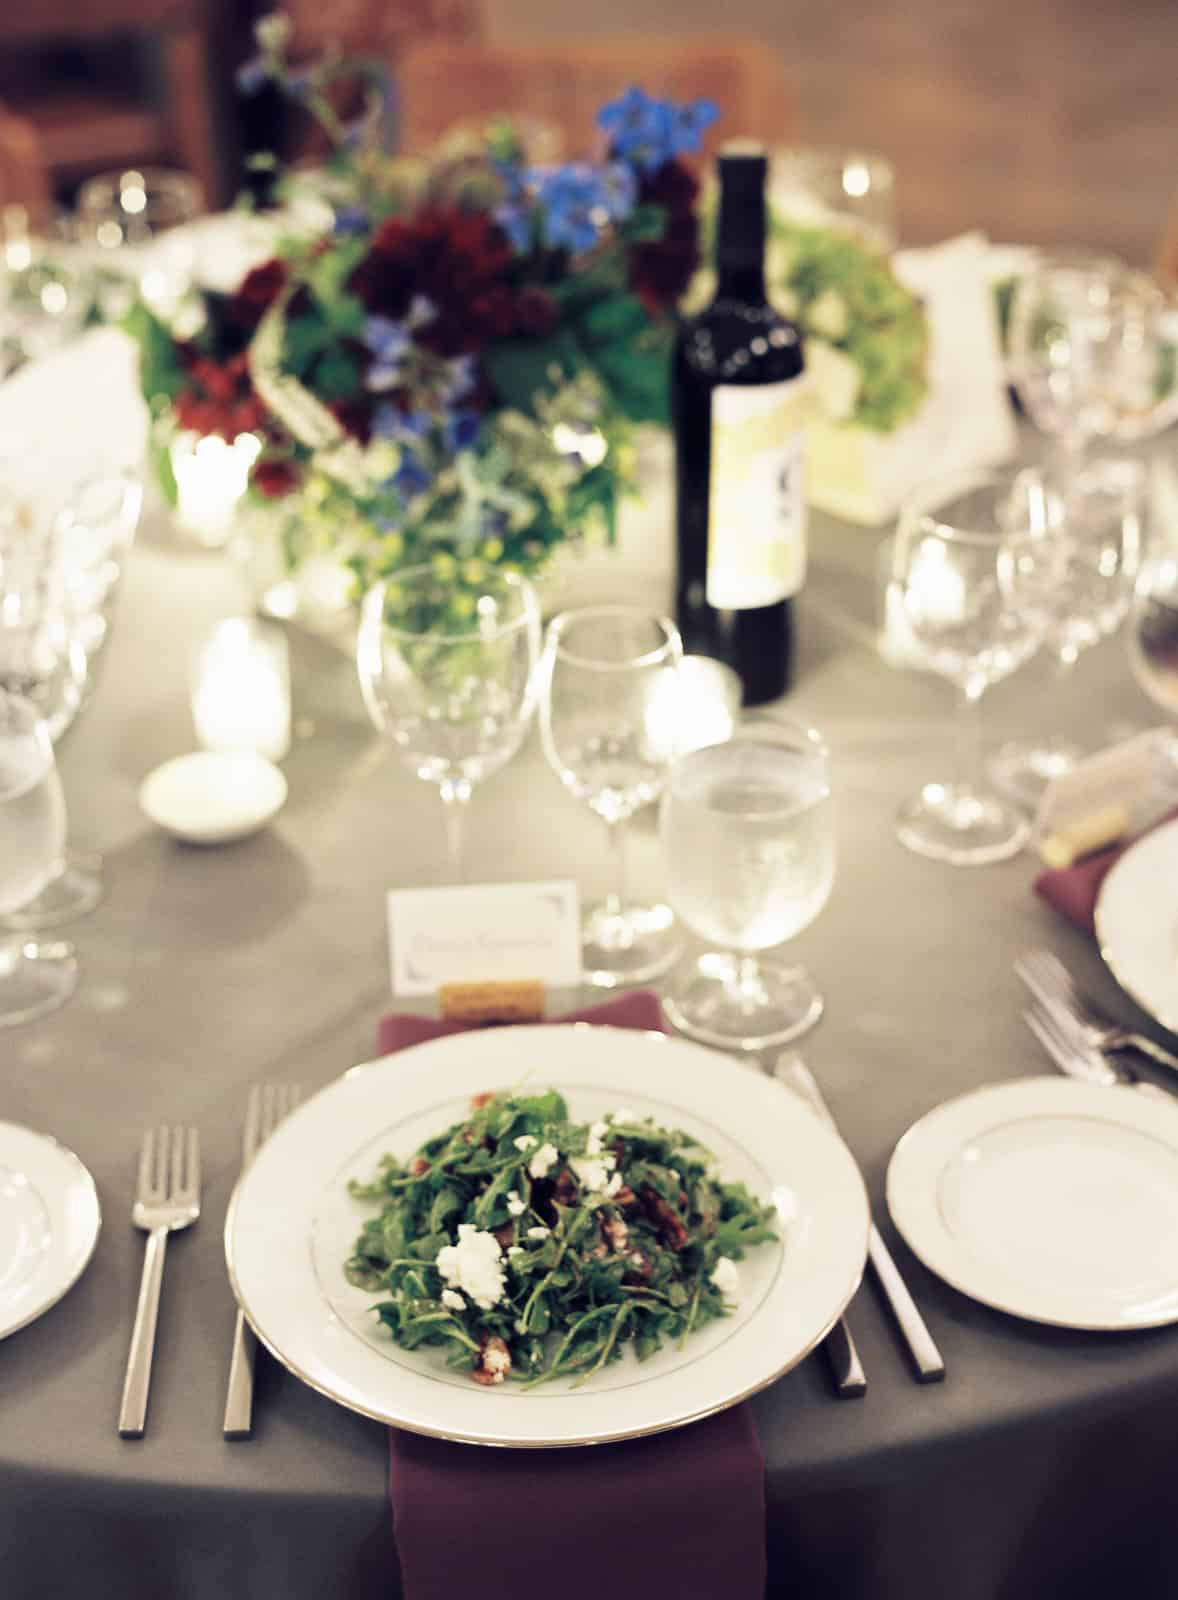 Salad and table setting